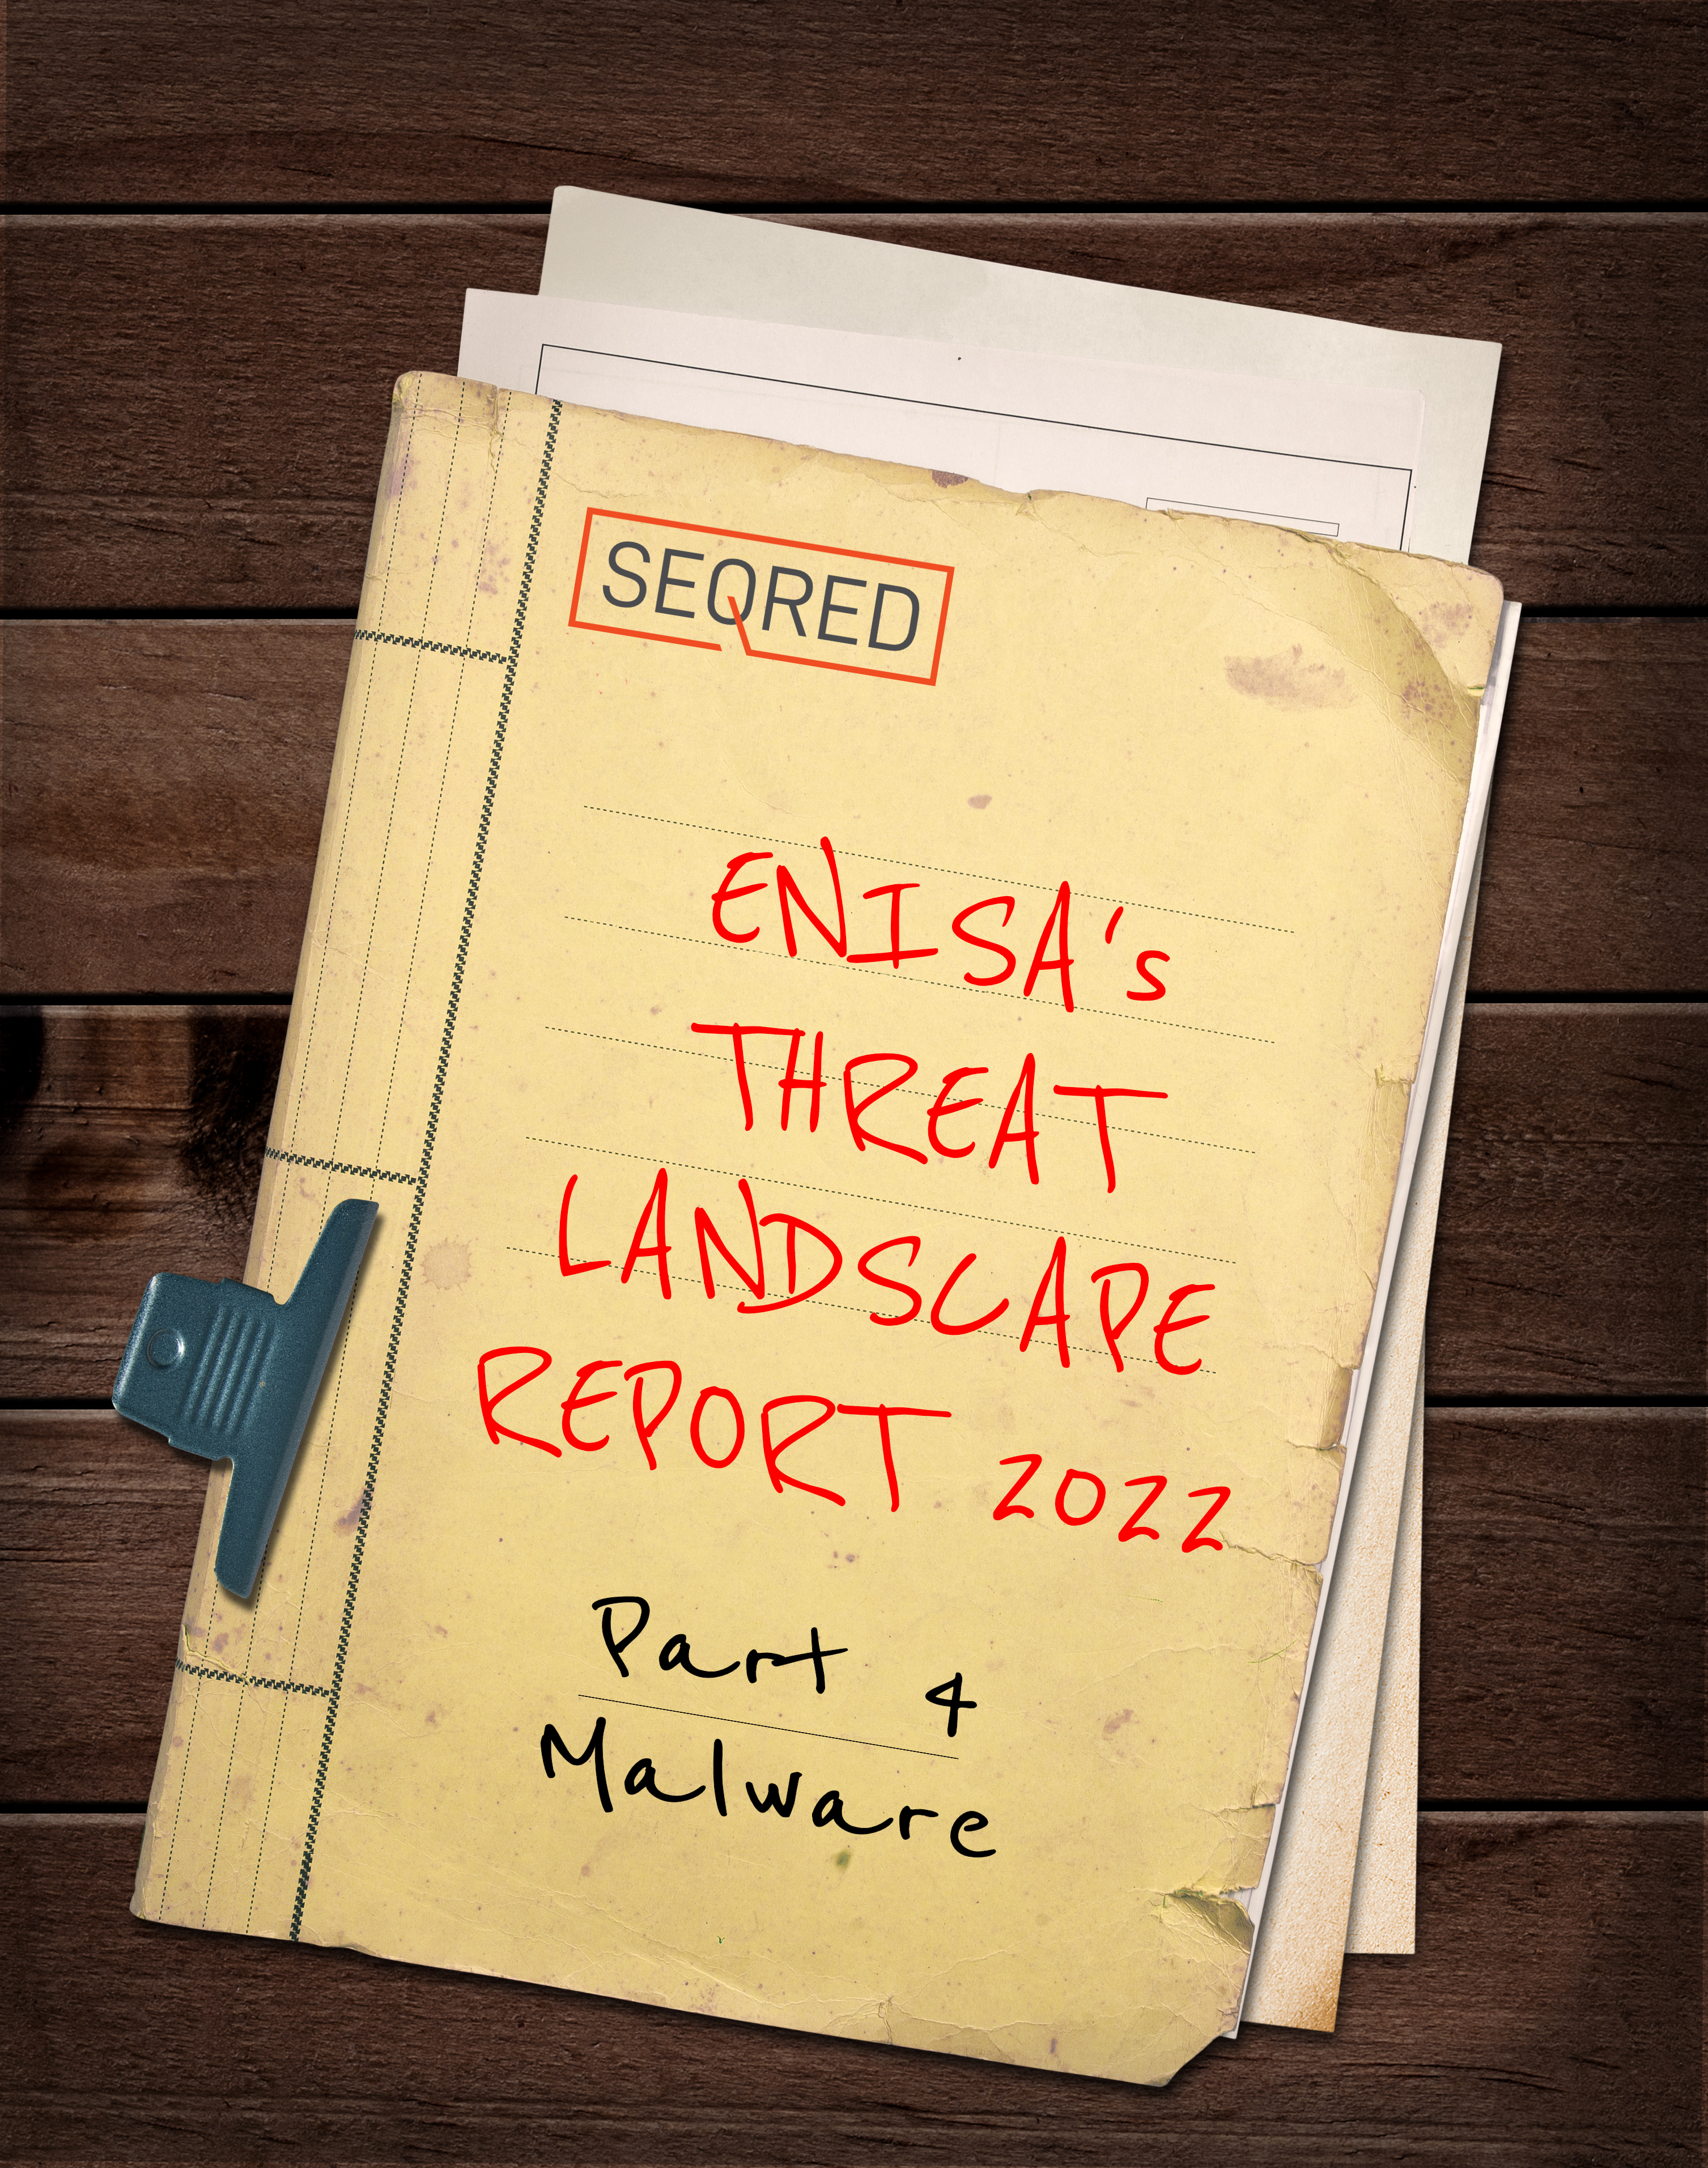 Enisa's Threat Landscape Report 2022 part 4 Malware